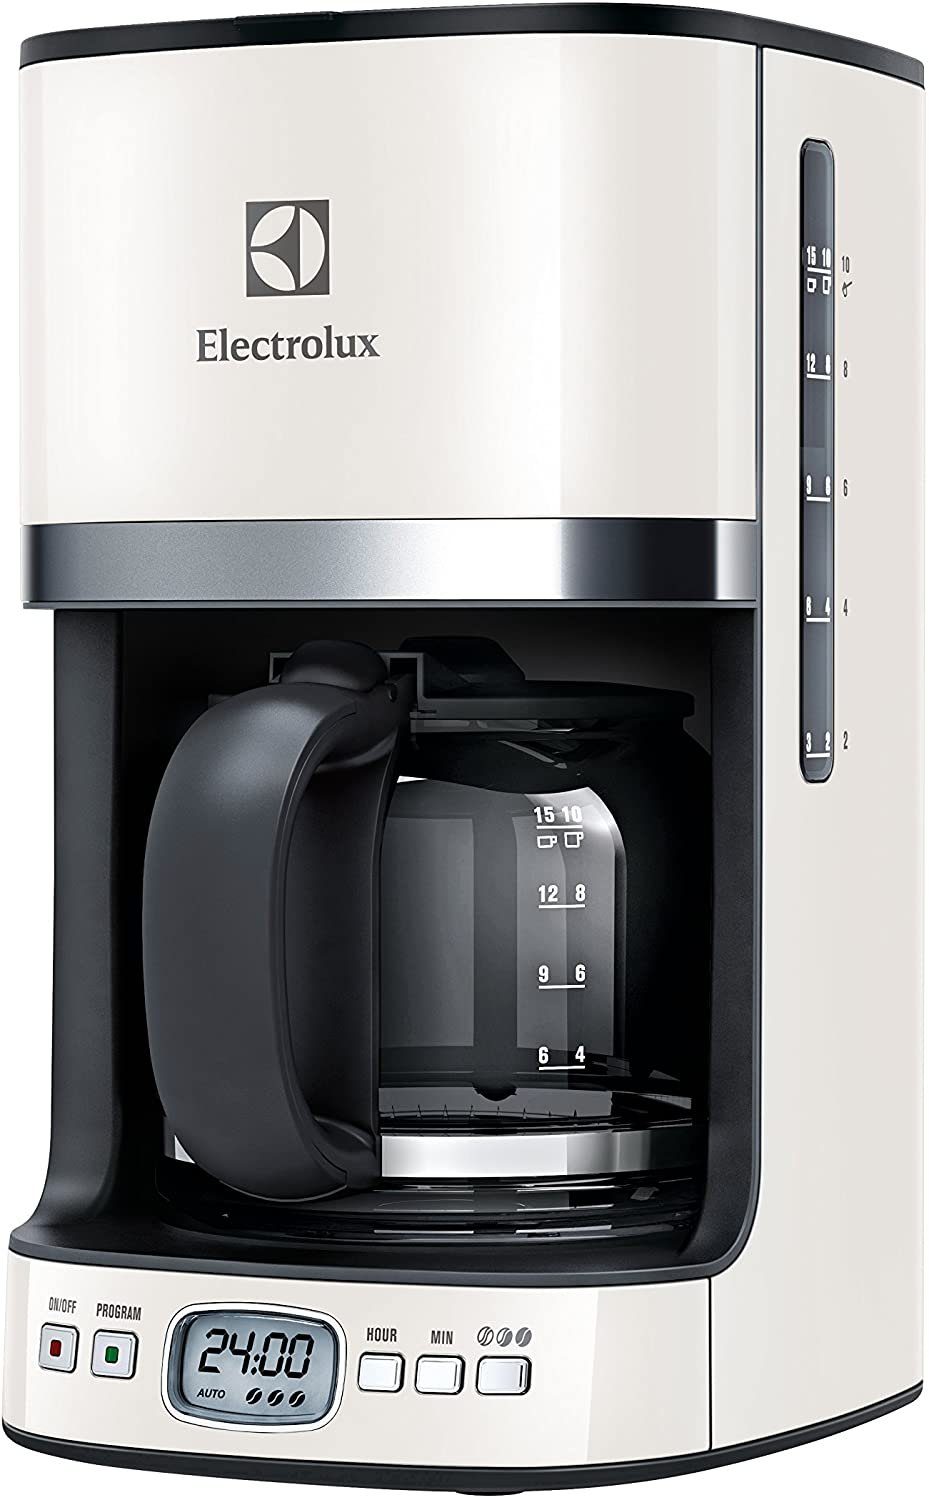 Electrolux Filterkaffeemaschine Electrolux EKF7500W Kaffeemaschine Creme/Weiß  LCD-Display Timer Aromawahl, 1.25l Kaffeekanne, Papierfilter 1x4,  Programmierbarer Timer online kaufen | OTTO